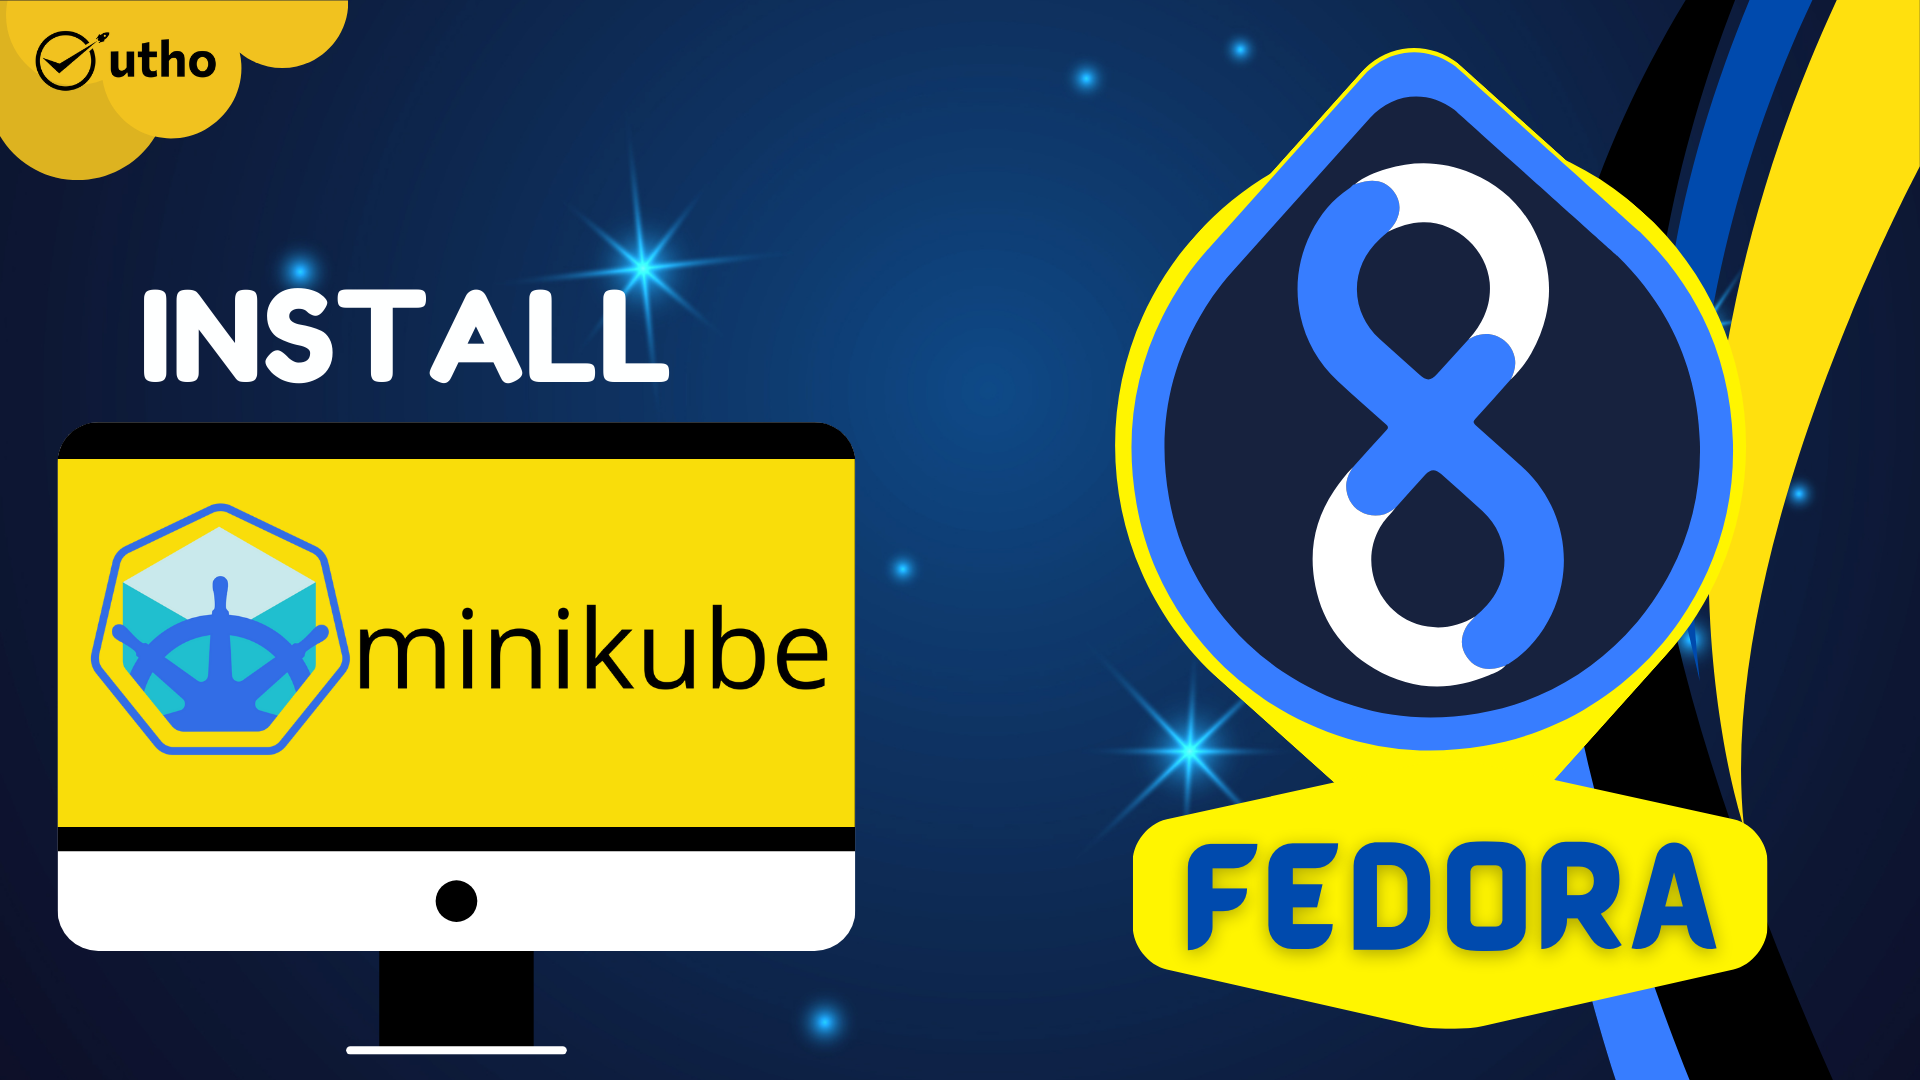 How to install Minikube on Fedora server